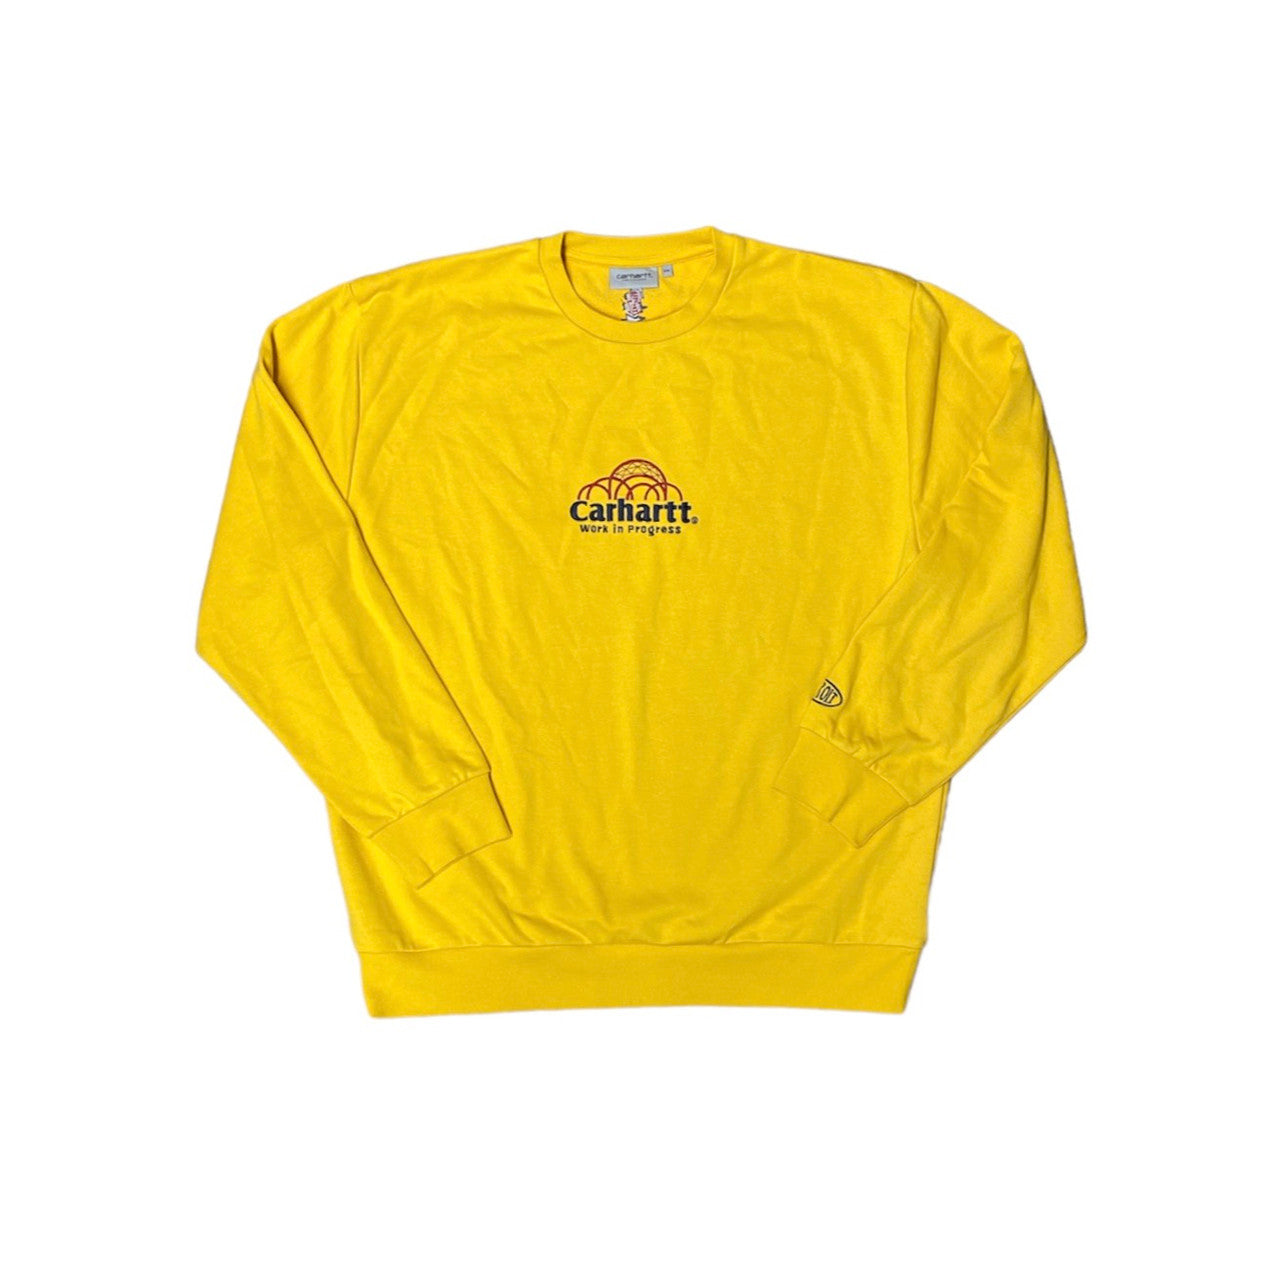 Carhartt Geo Script Yellow Sweatshirt